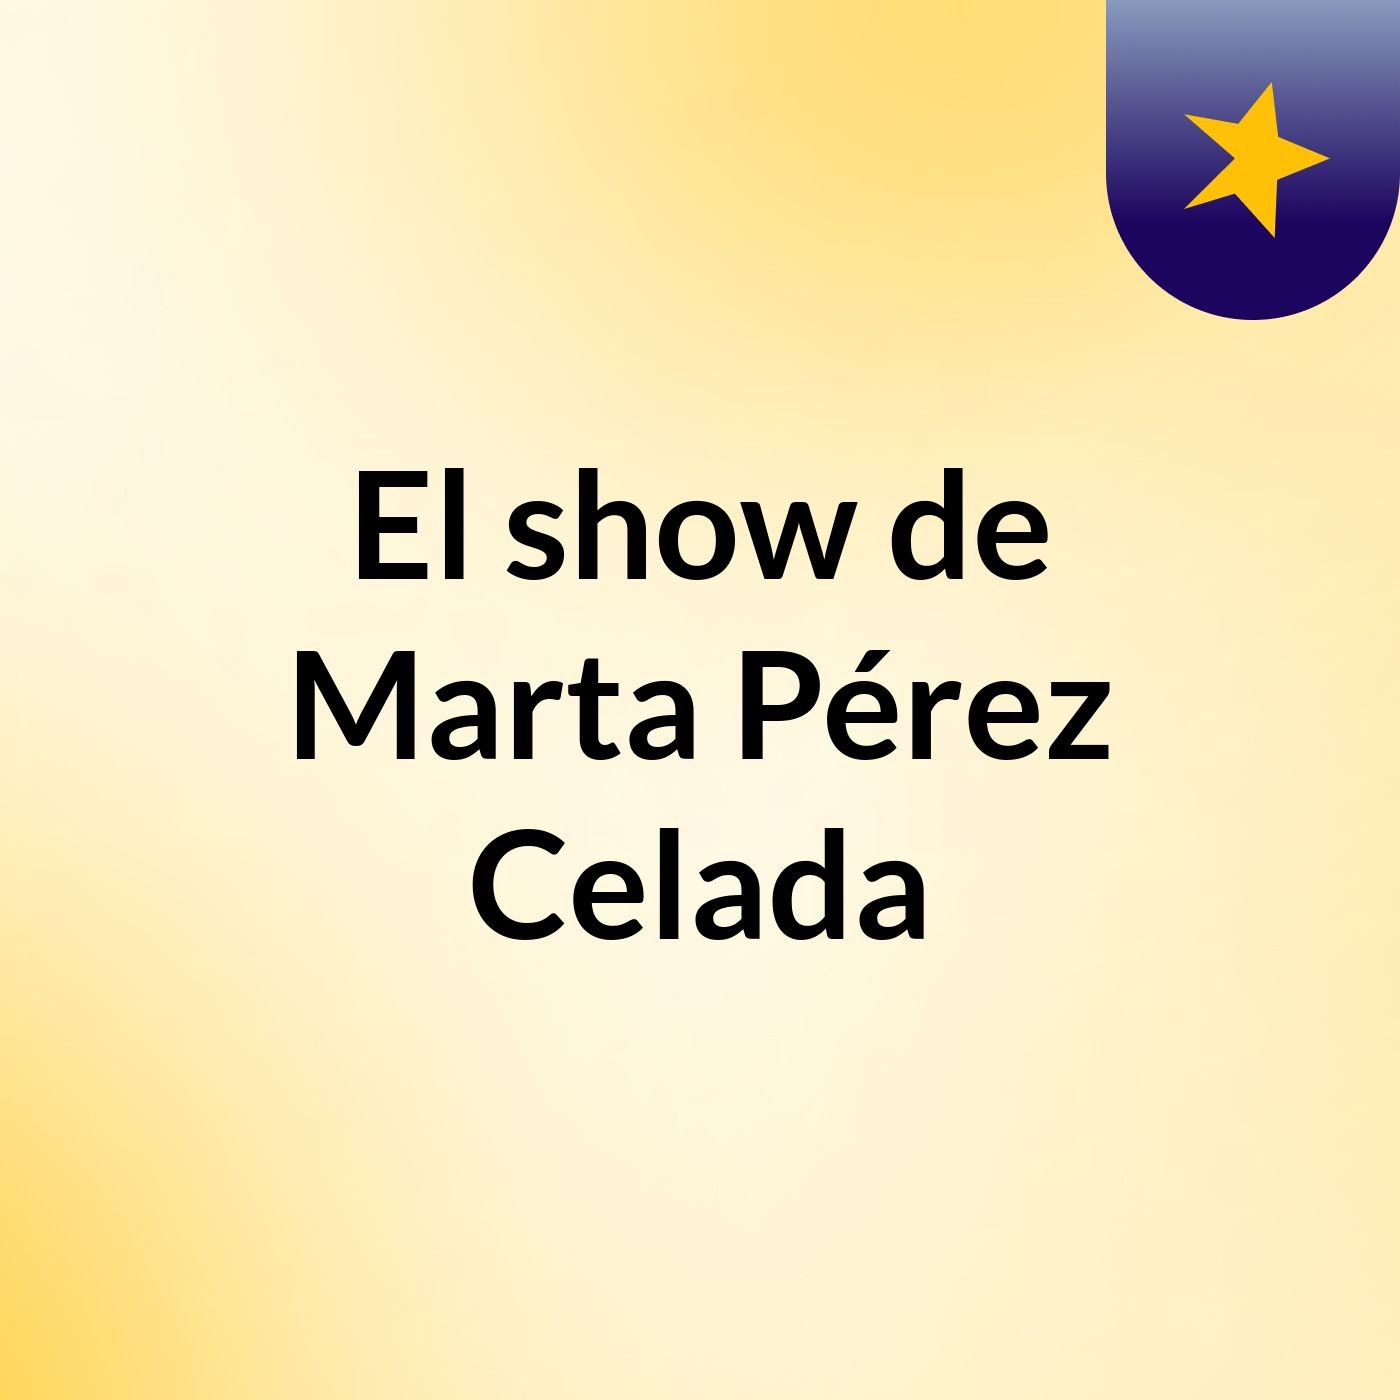 El show de Marta Pérez Celada